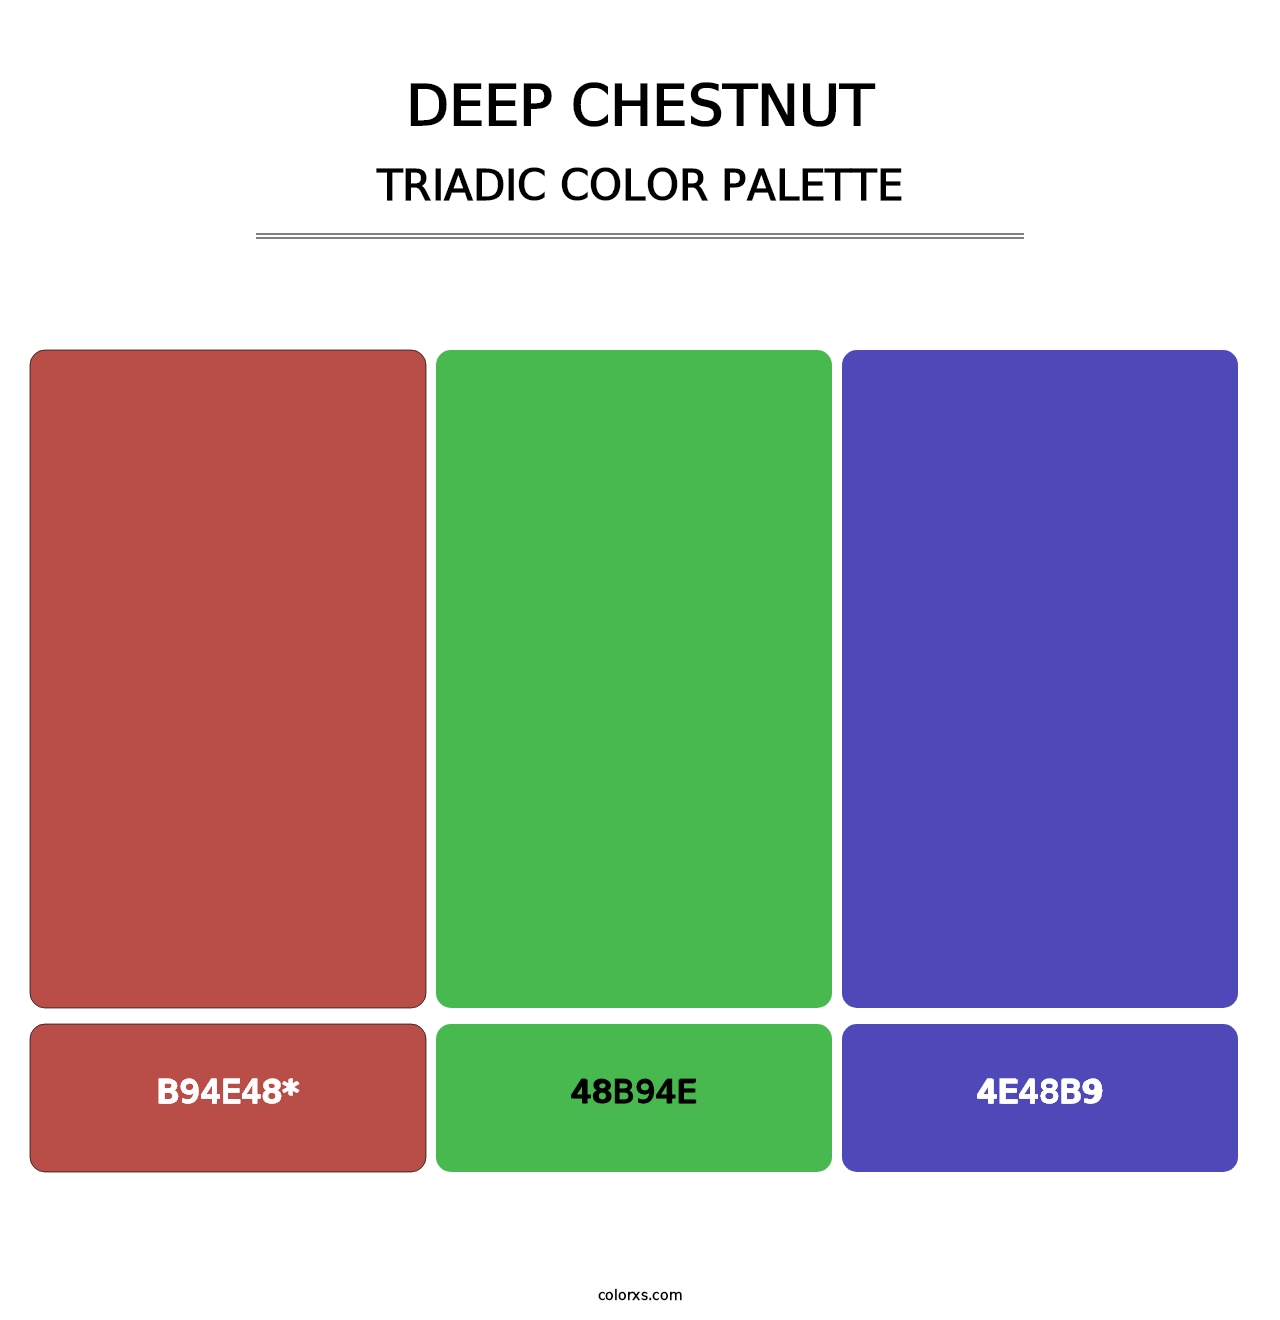 Deep Chestnut - Triadic Color Palette